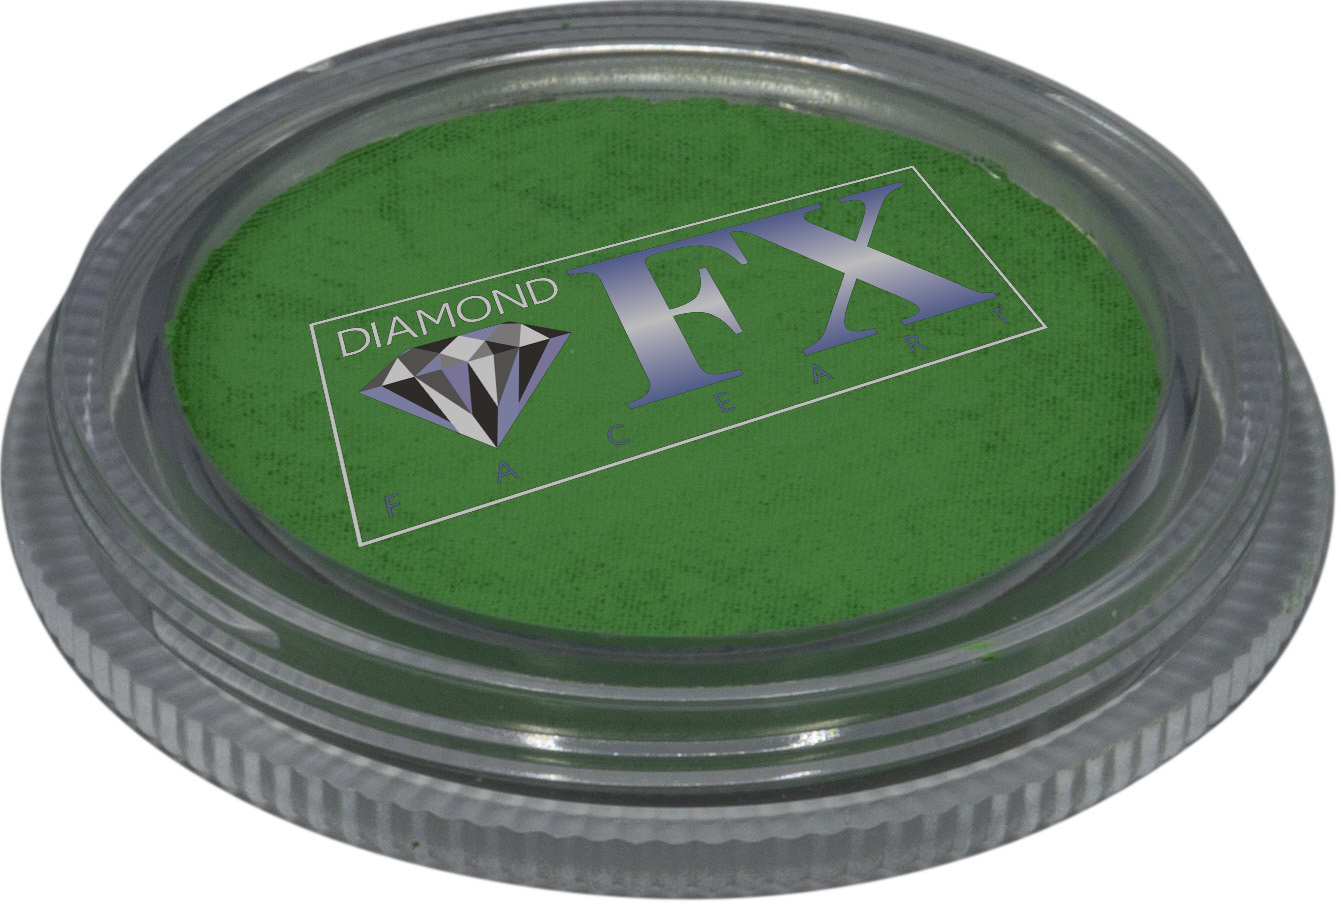 Diamond FX Green 30g - Small Image